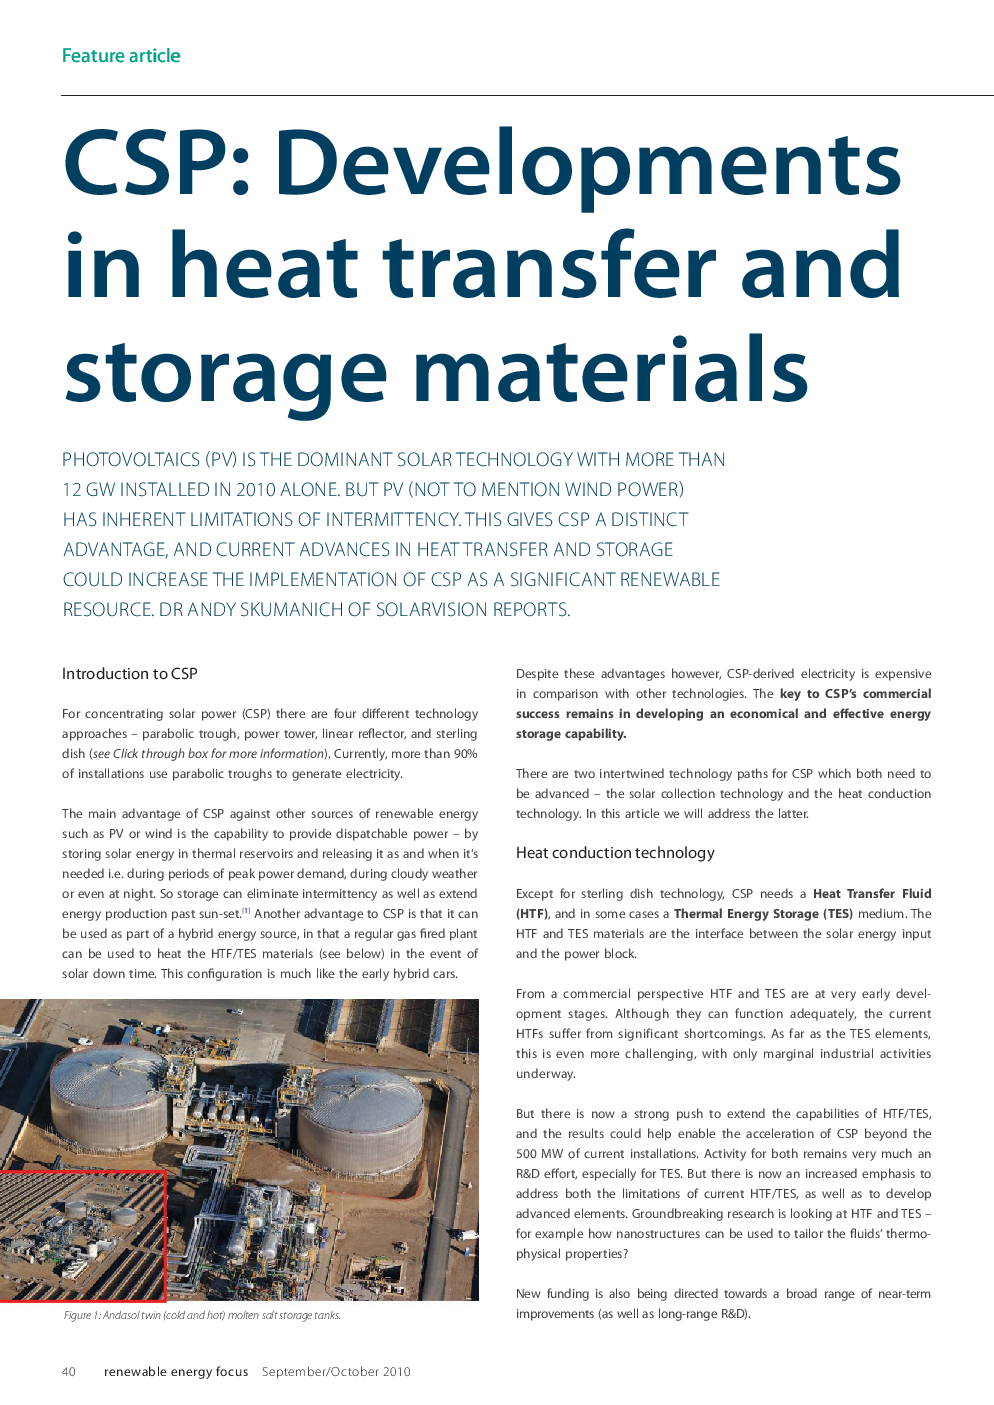 CSP: Developments in heat transfer and storage materials